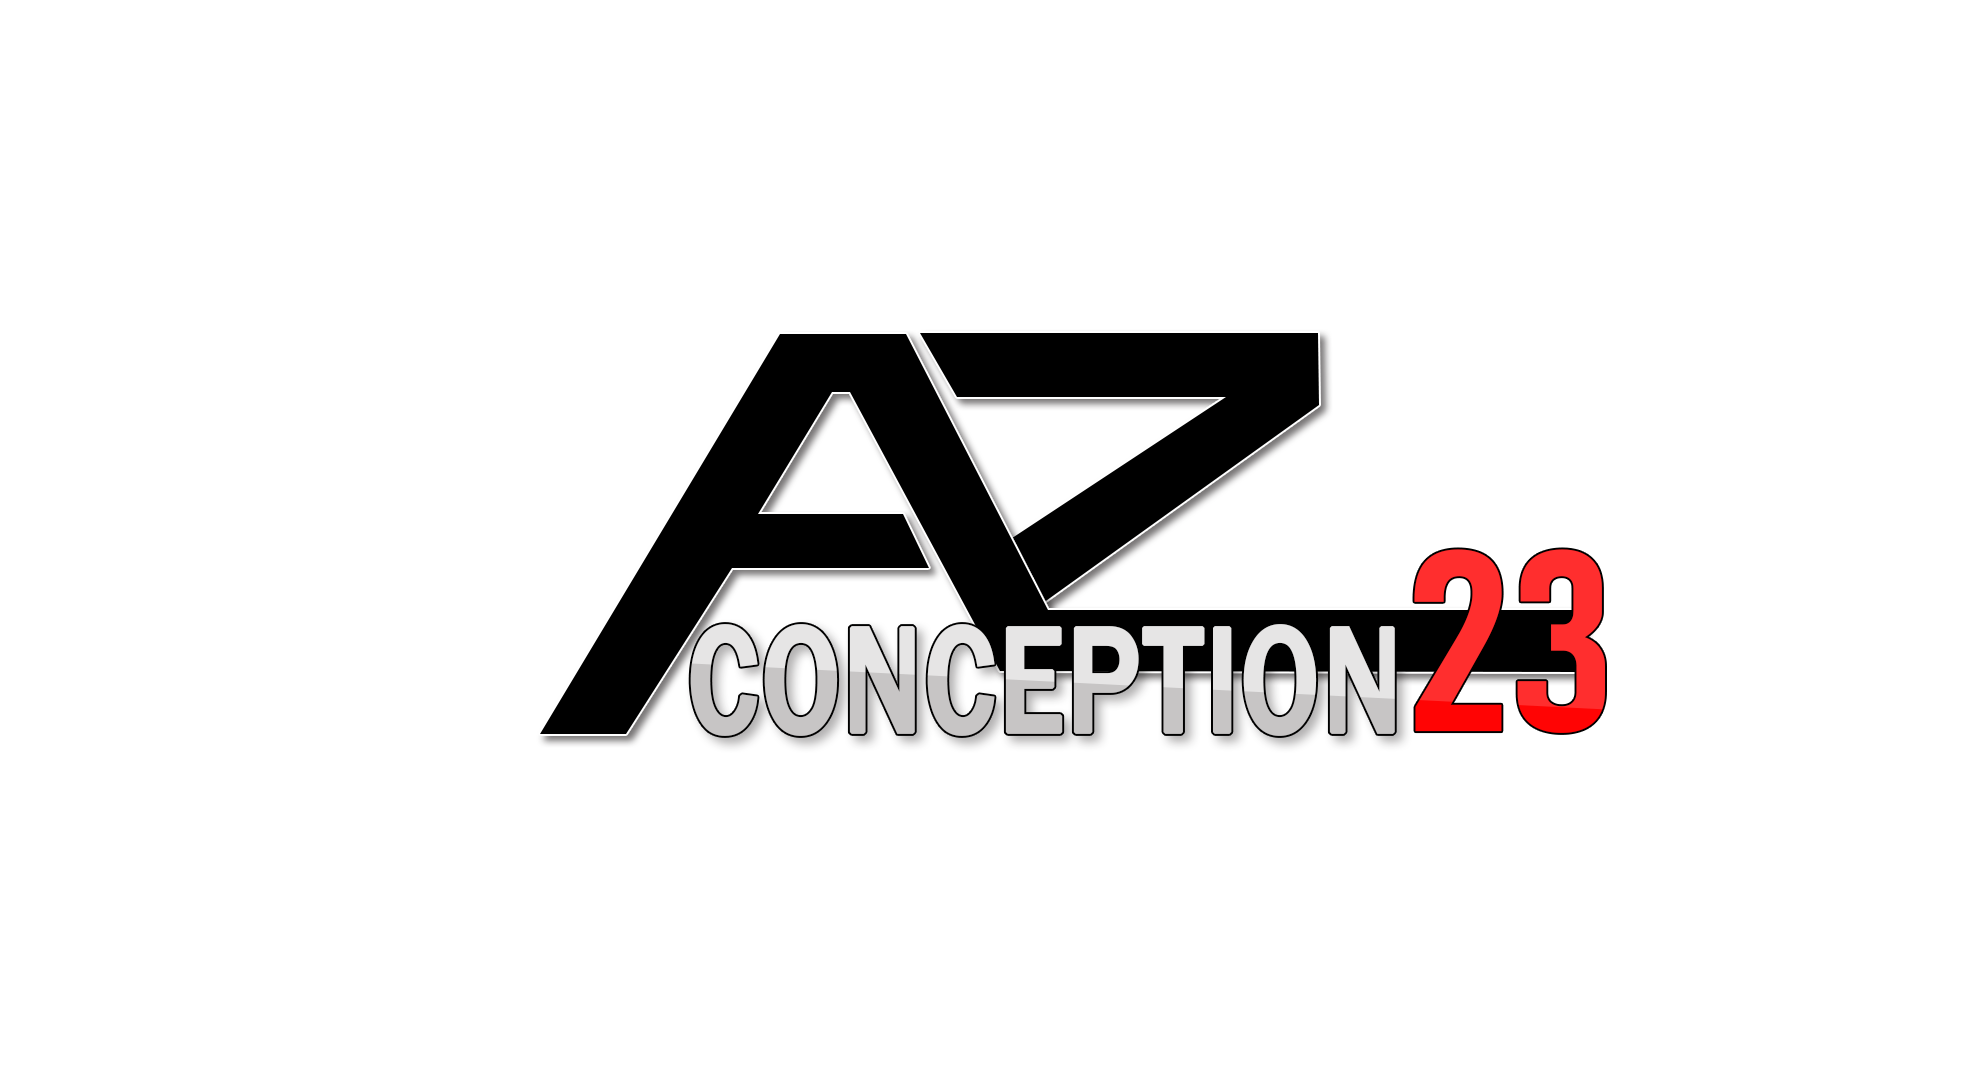 AZ conception 23